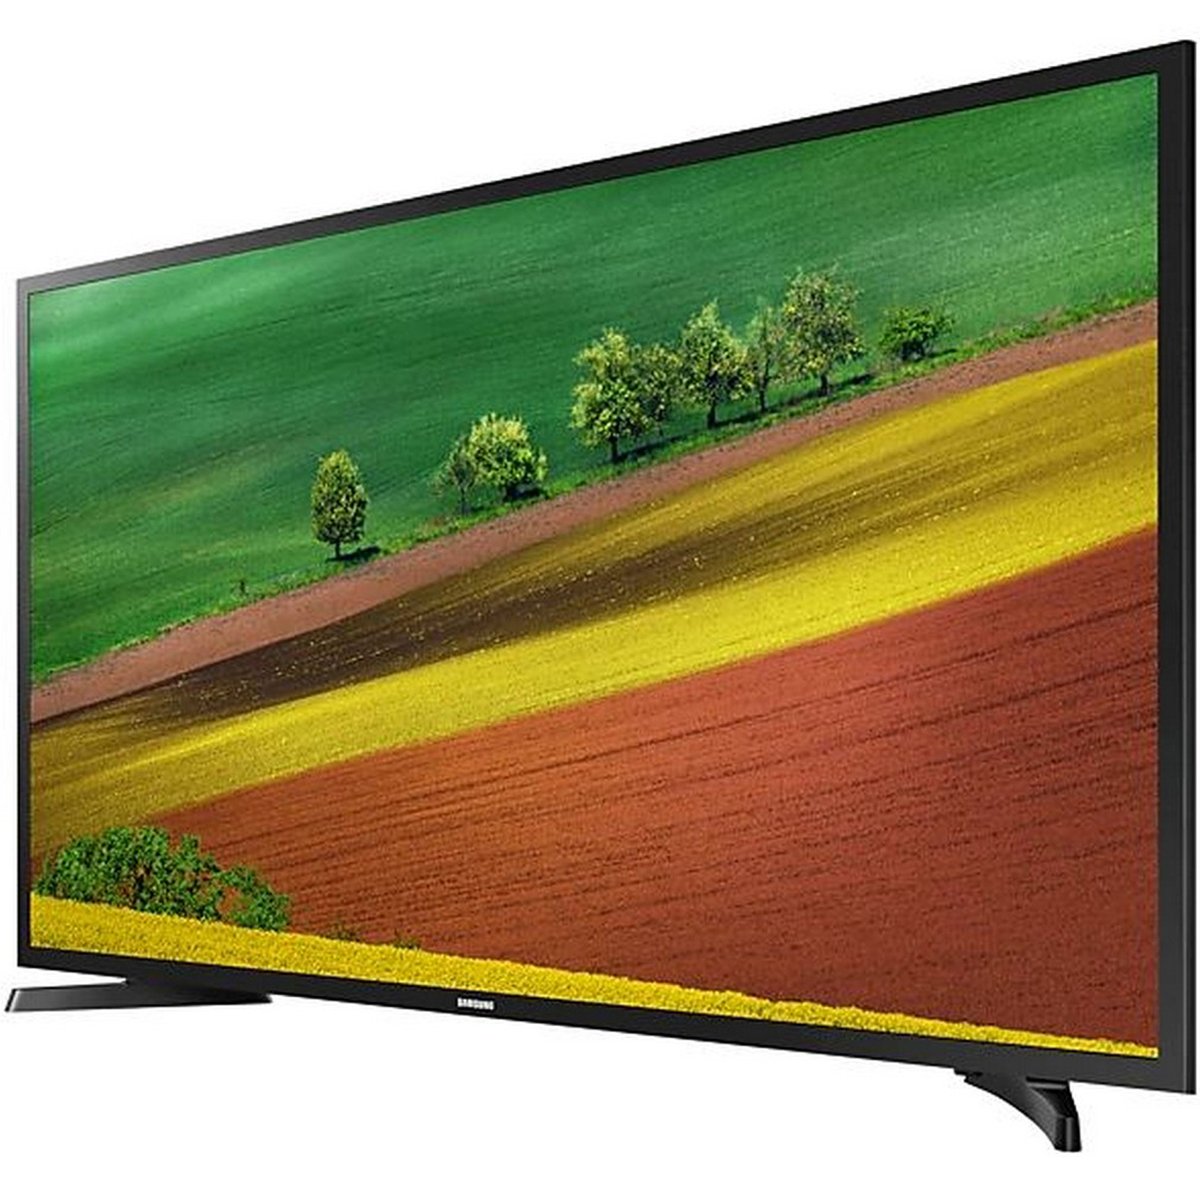 Samsung Smart HD LED TV UA32N5300 32inch